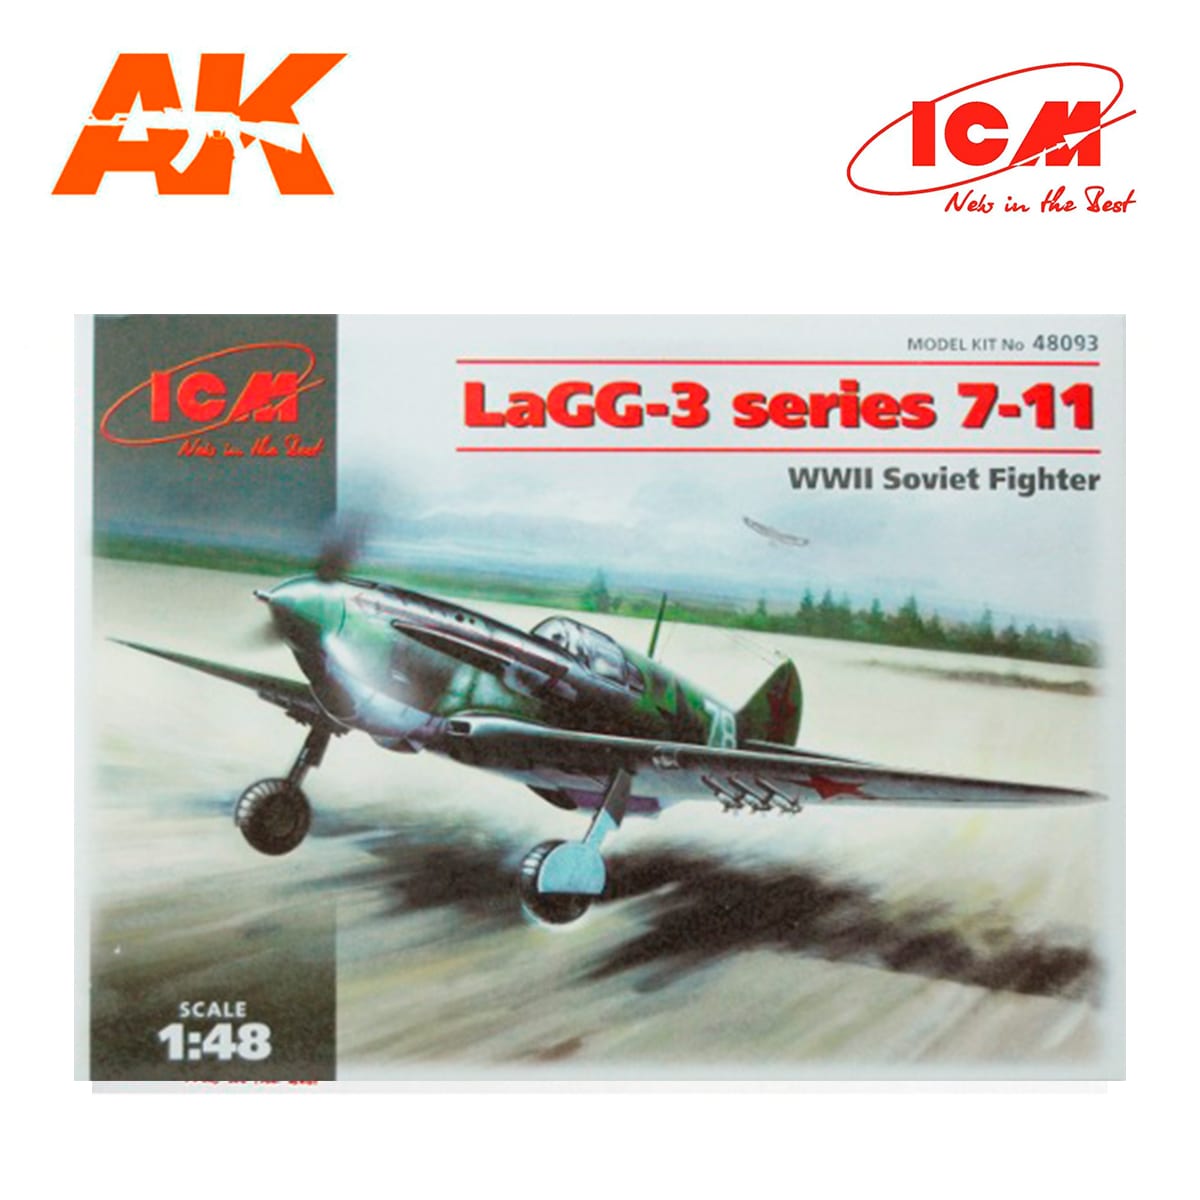 LaGG-3 series 7-11, WWII Soviet Fighter 1/48